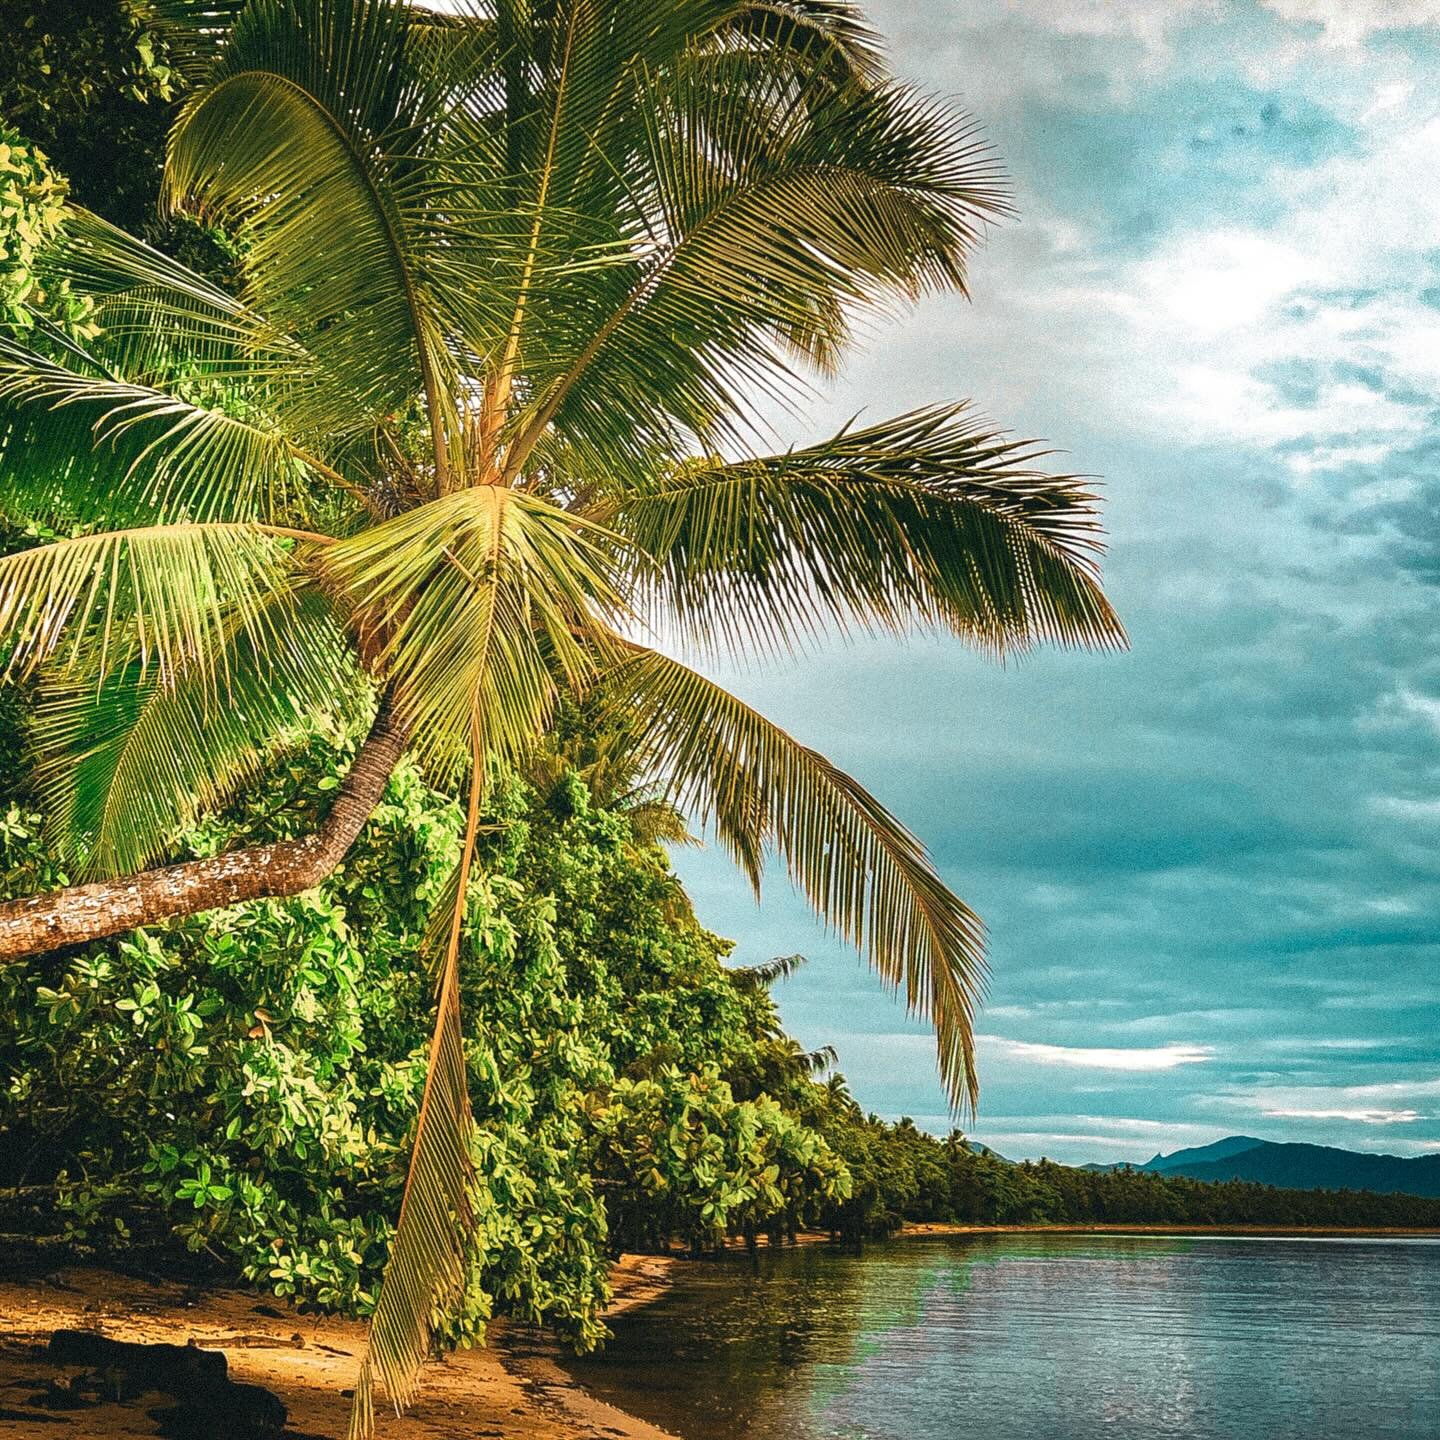 Tropical dreaming #portdouglas #wongabeach #farnorthqueensland